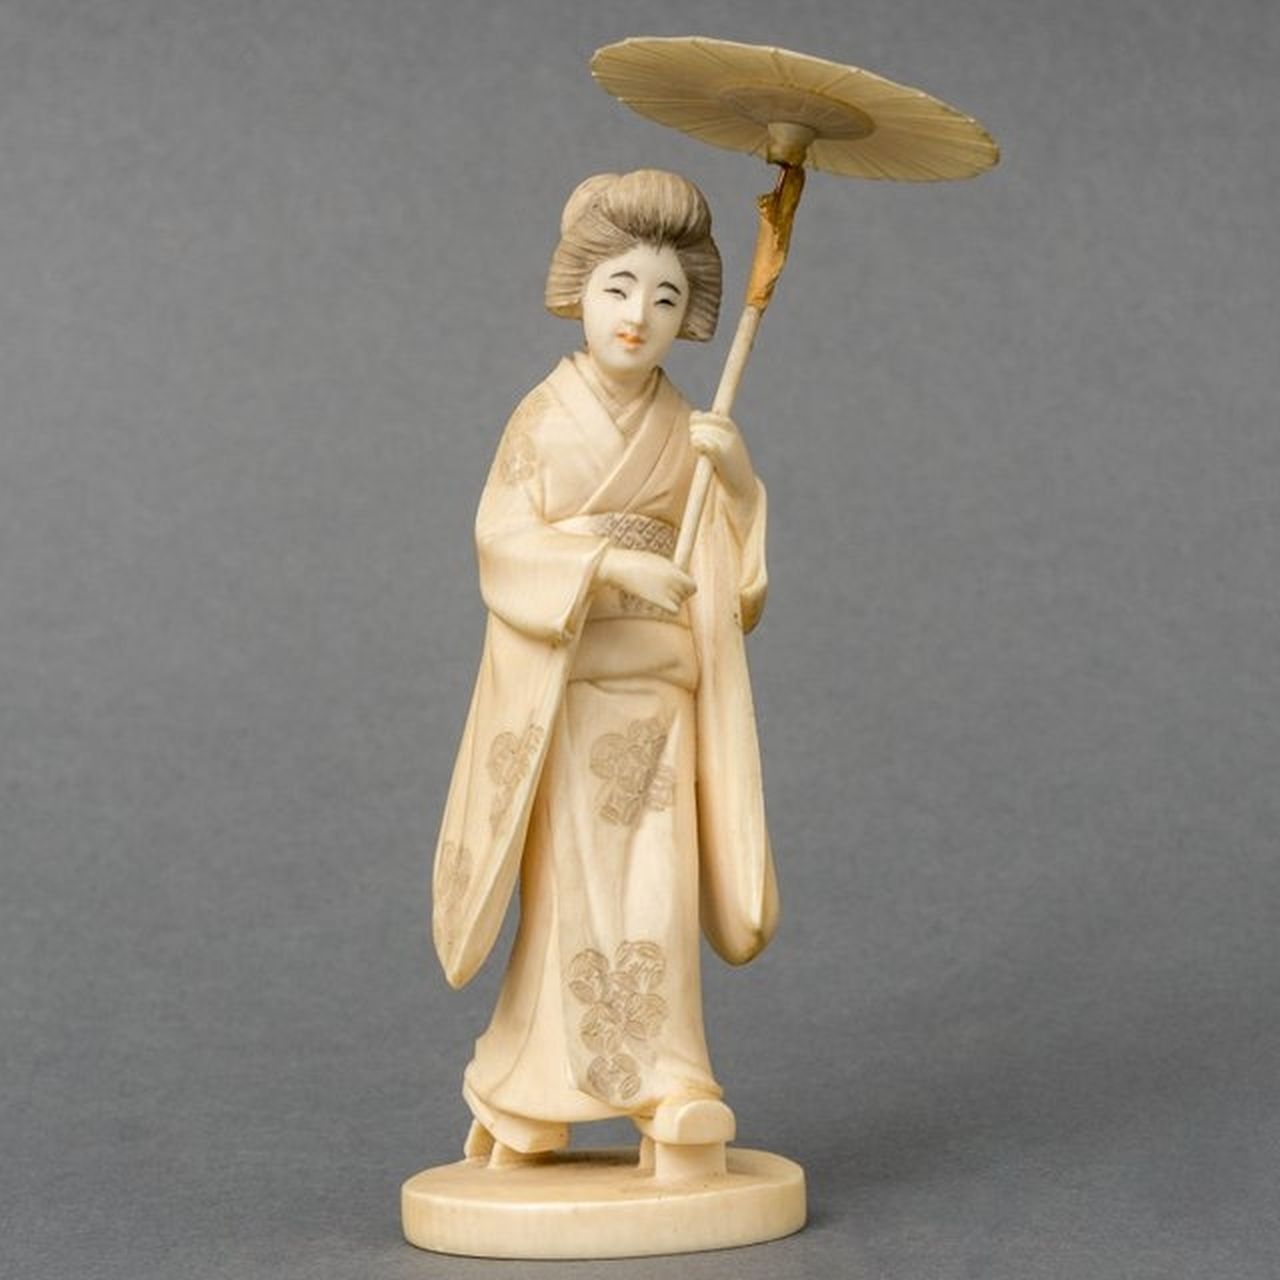 Japanse School, 19e eeuw | Okimono of a woman in a kimono holding a parasol, ivory, 13.0 cm